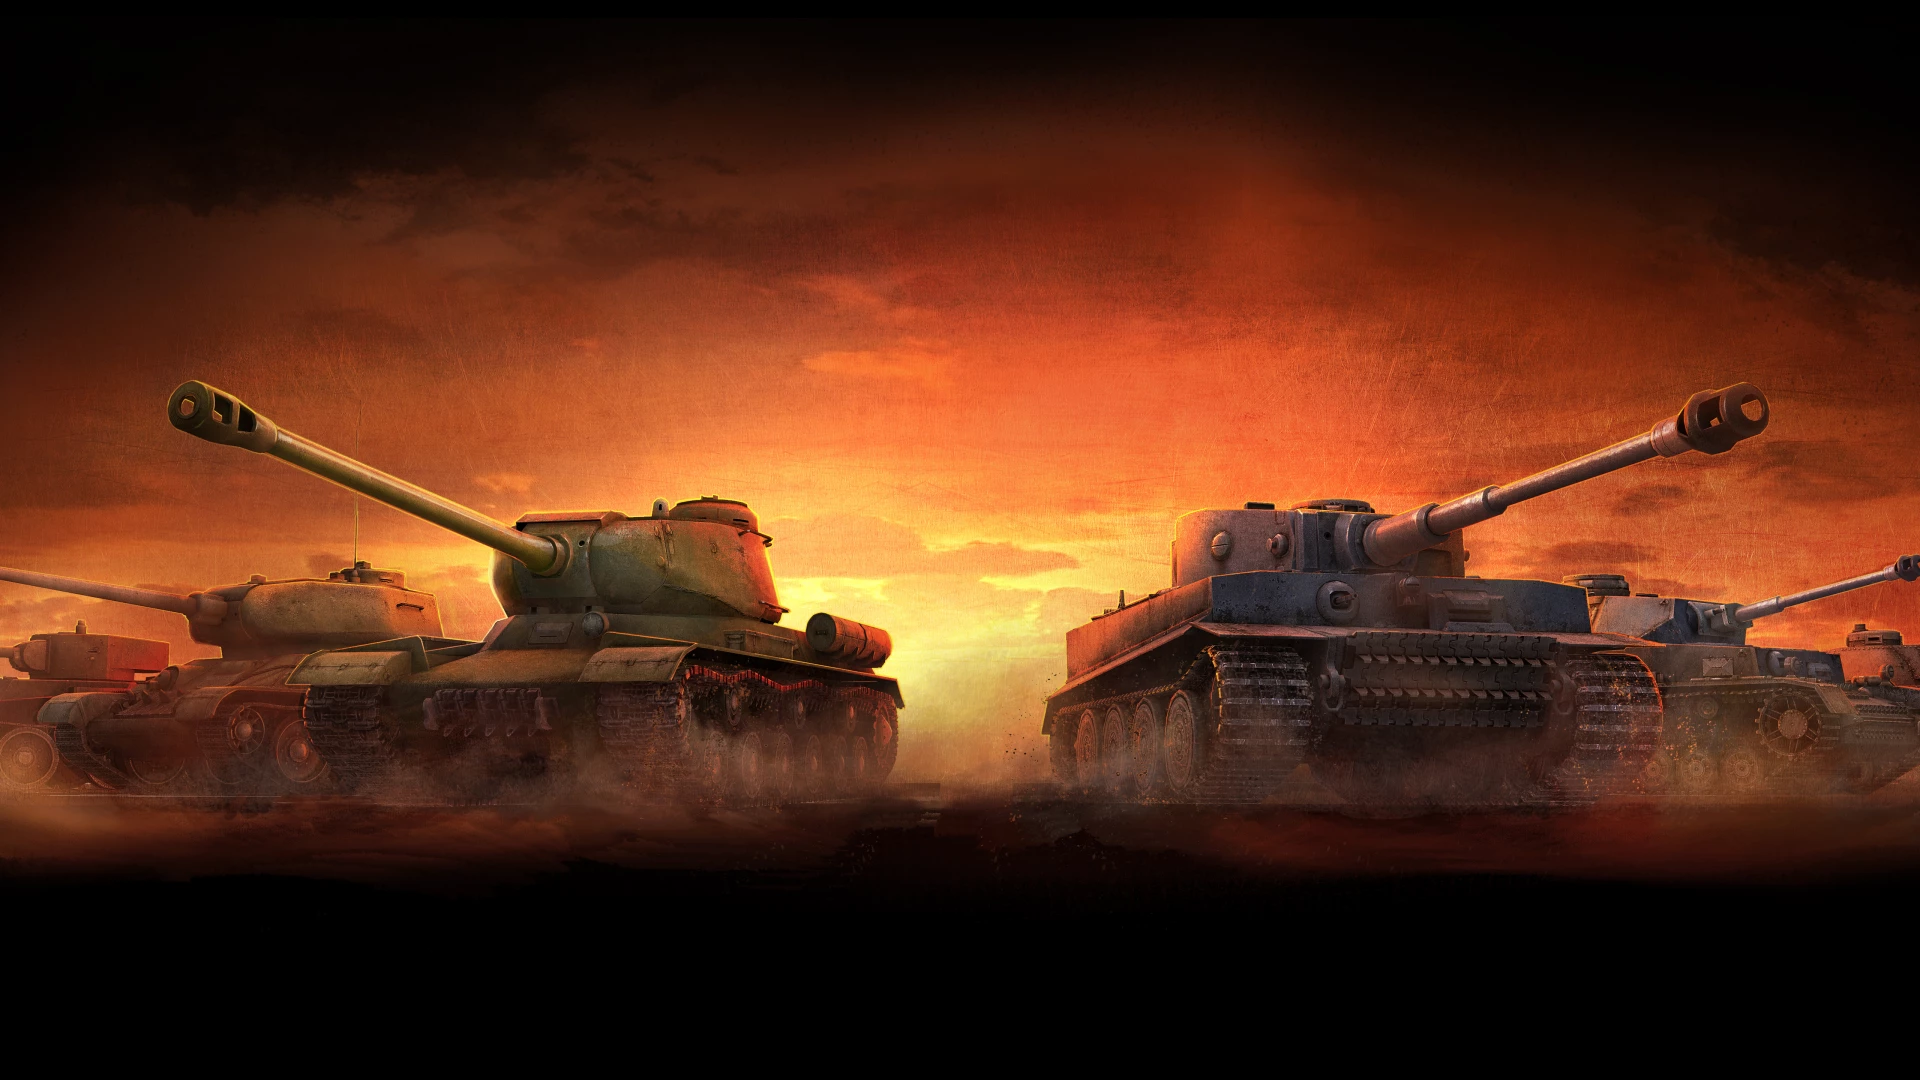 World of tanks mods free